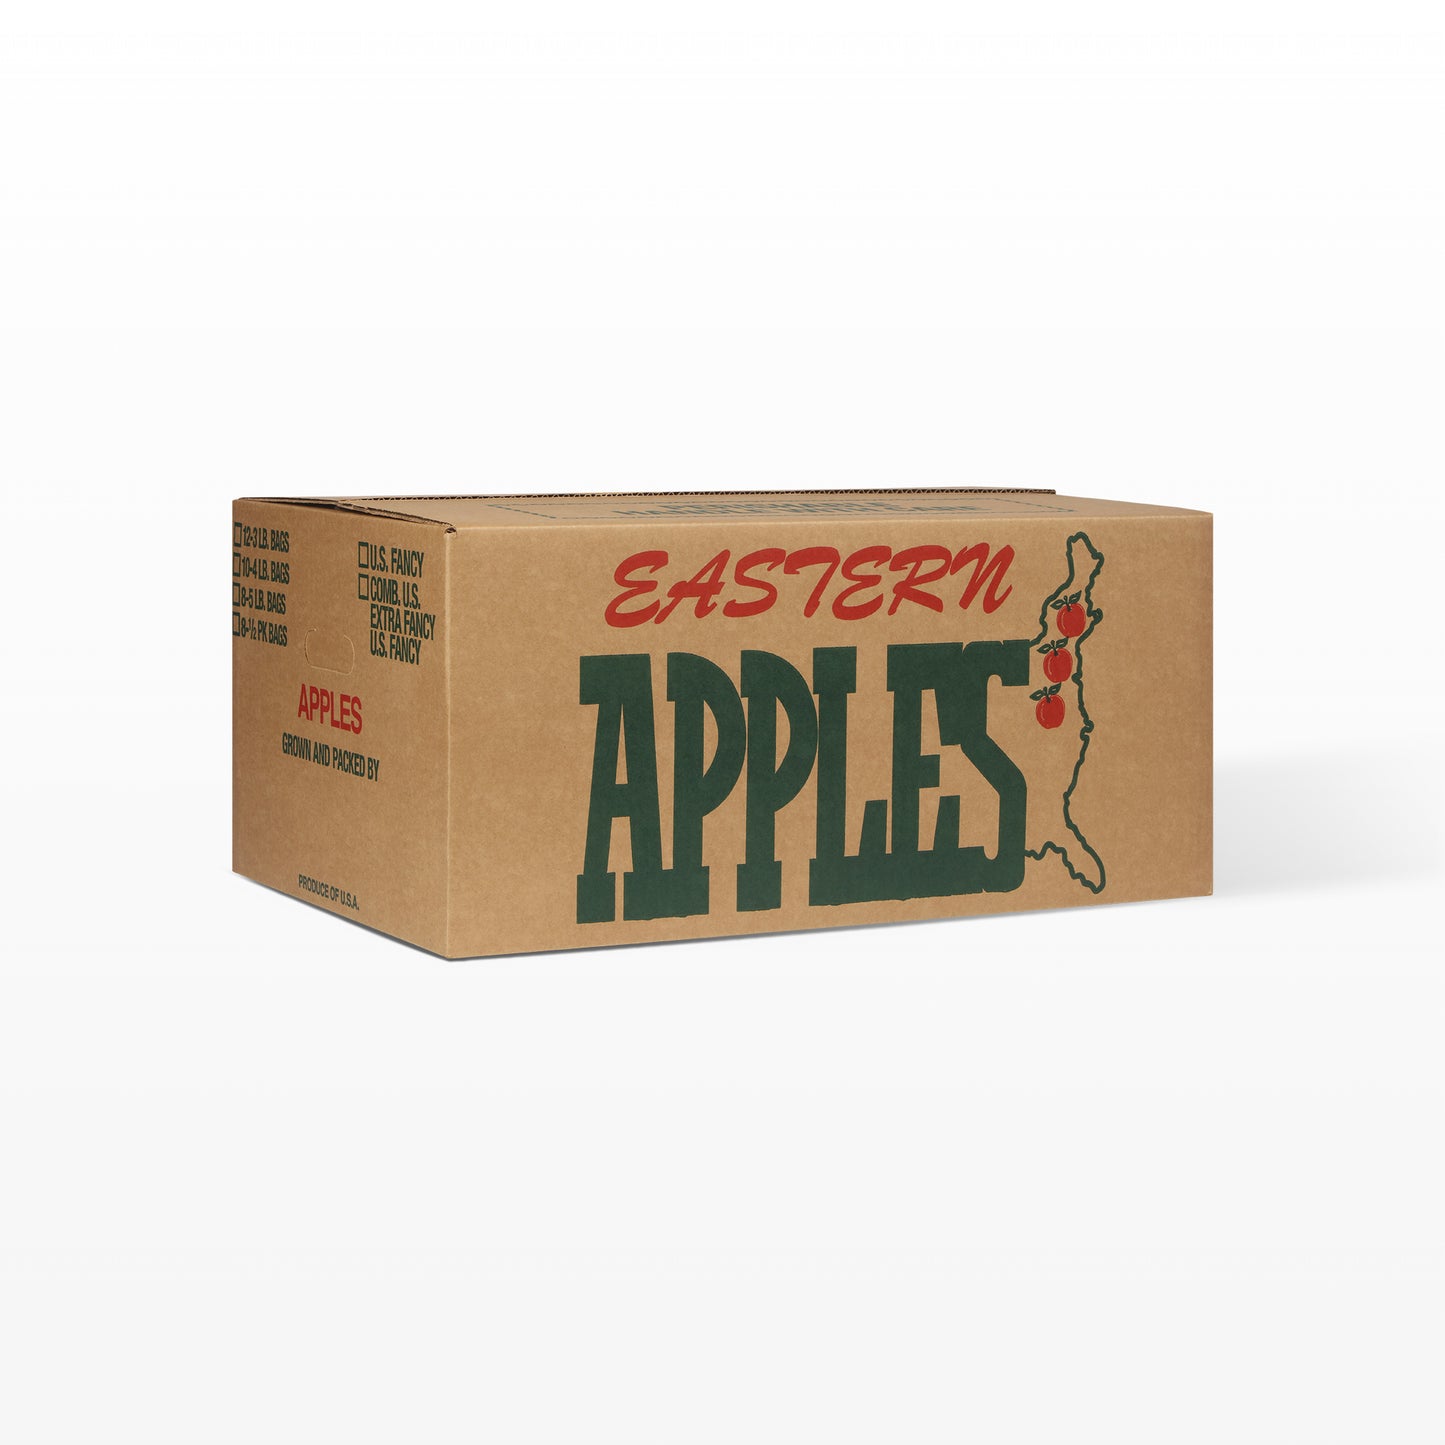 Apple Master Shipper